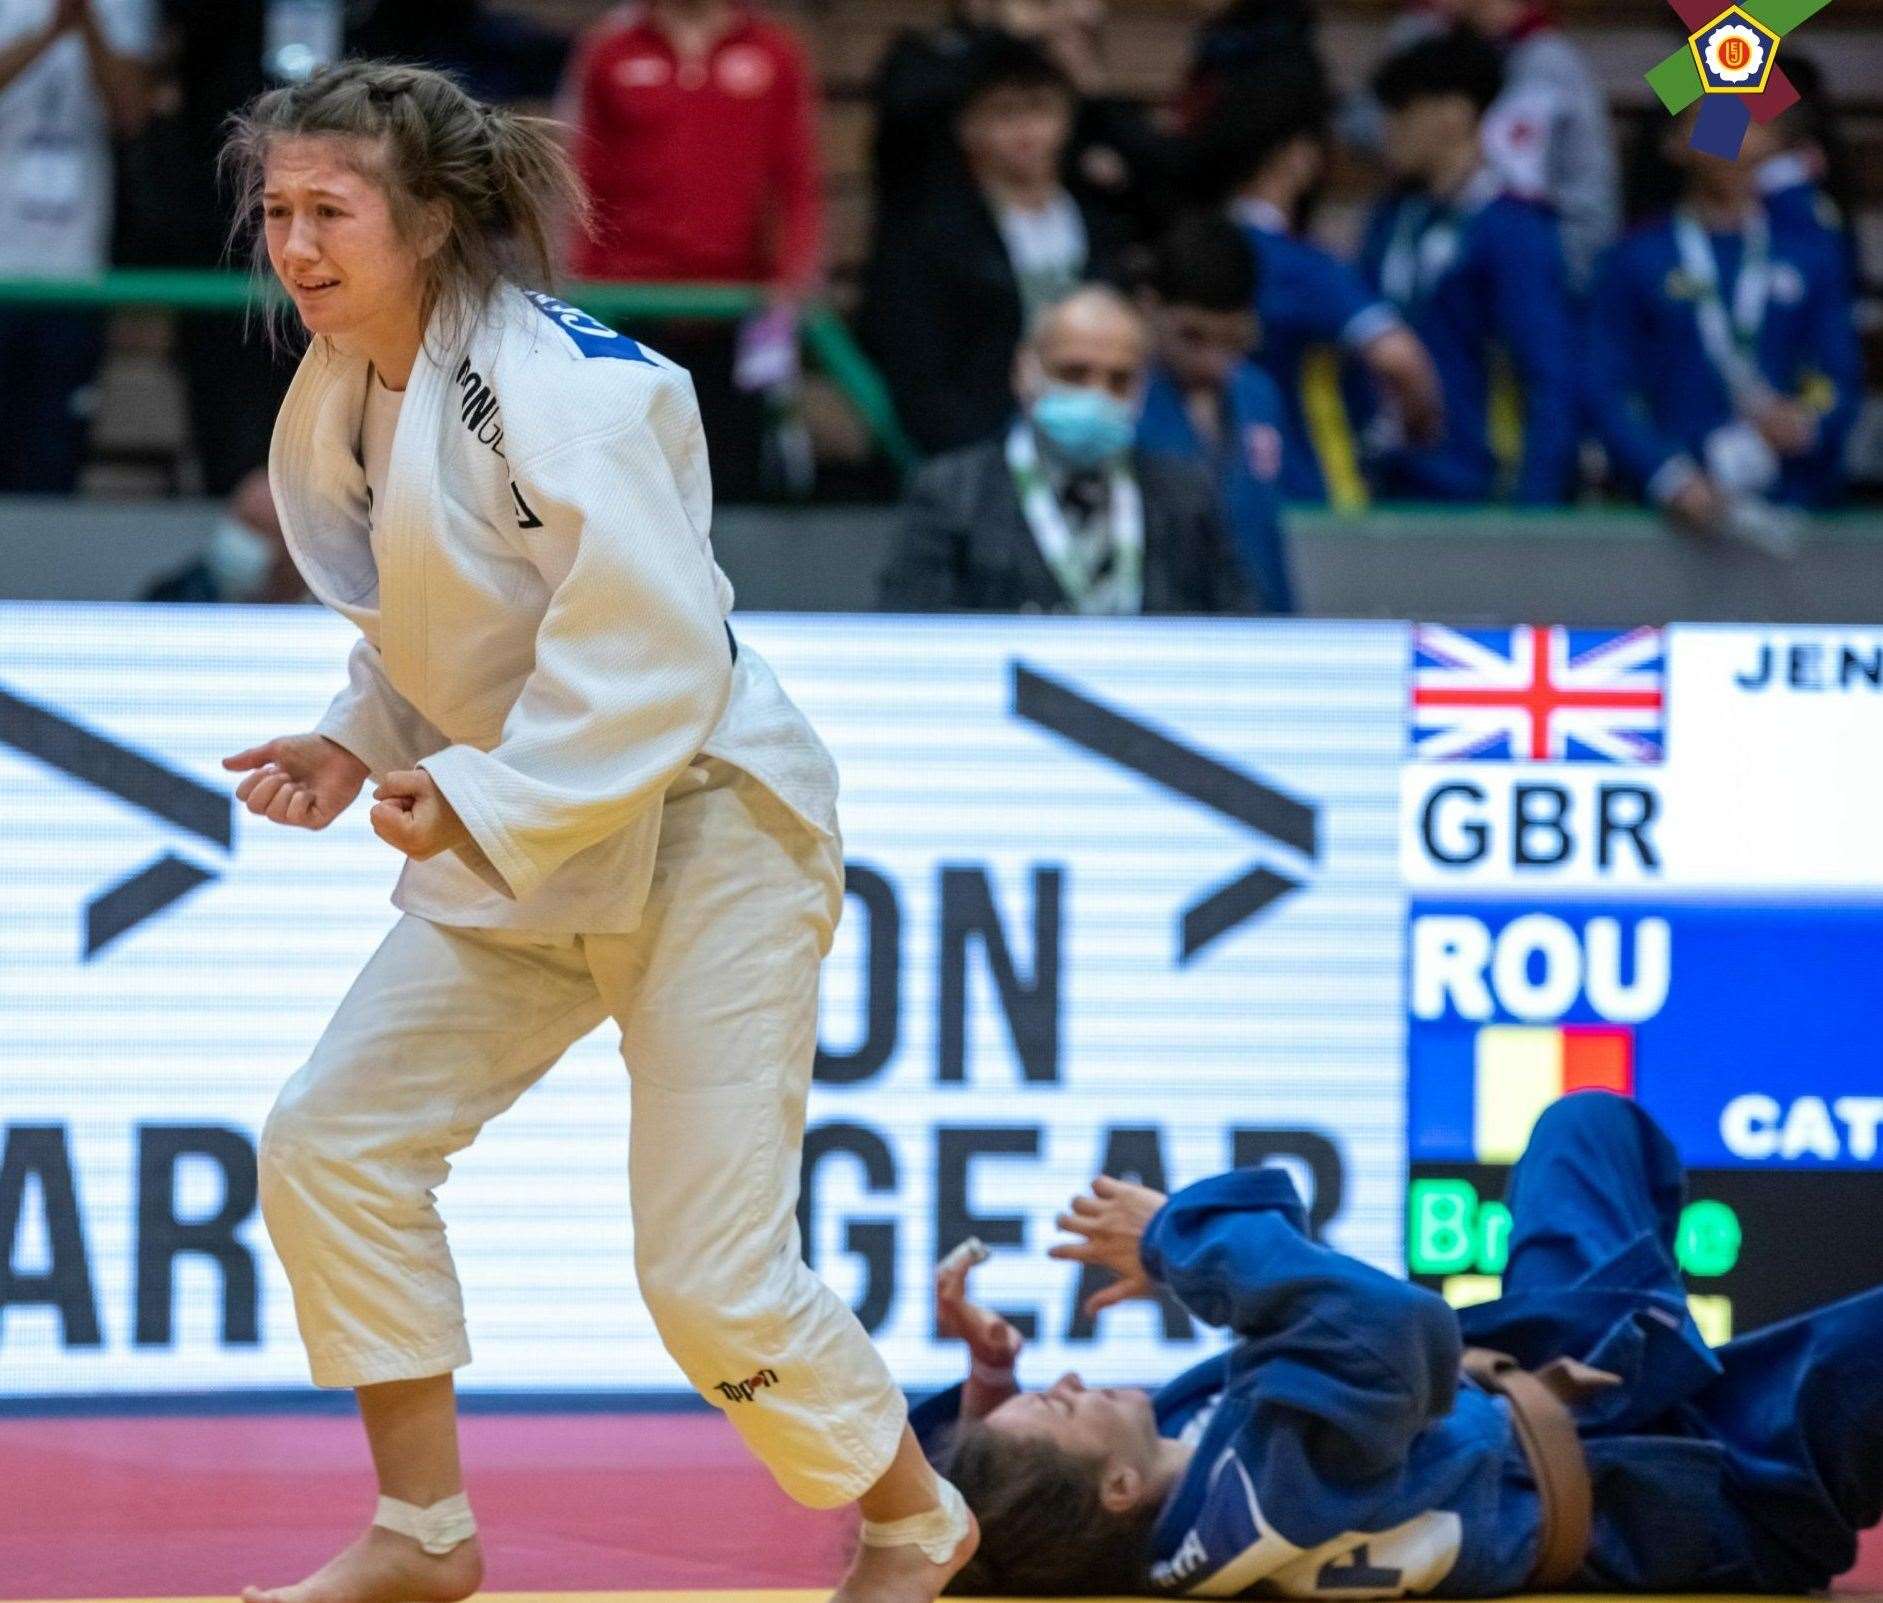 Dartford judo prospect Charlotte Jenman has shown plenty of fighting spirit this year